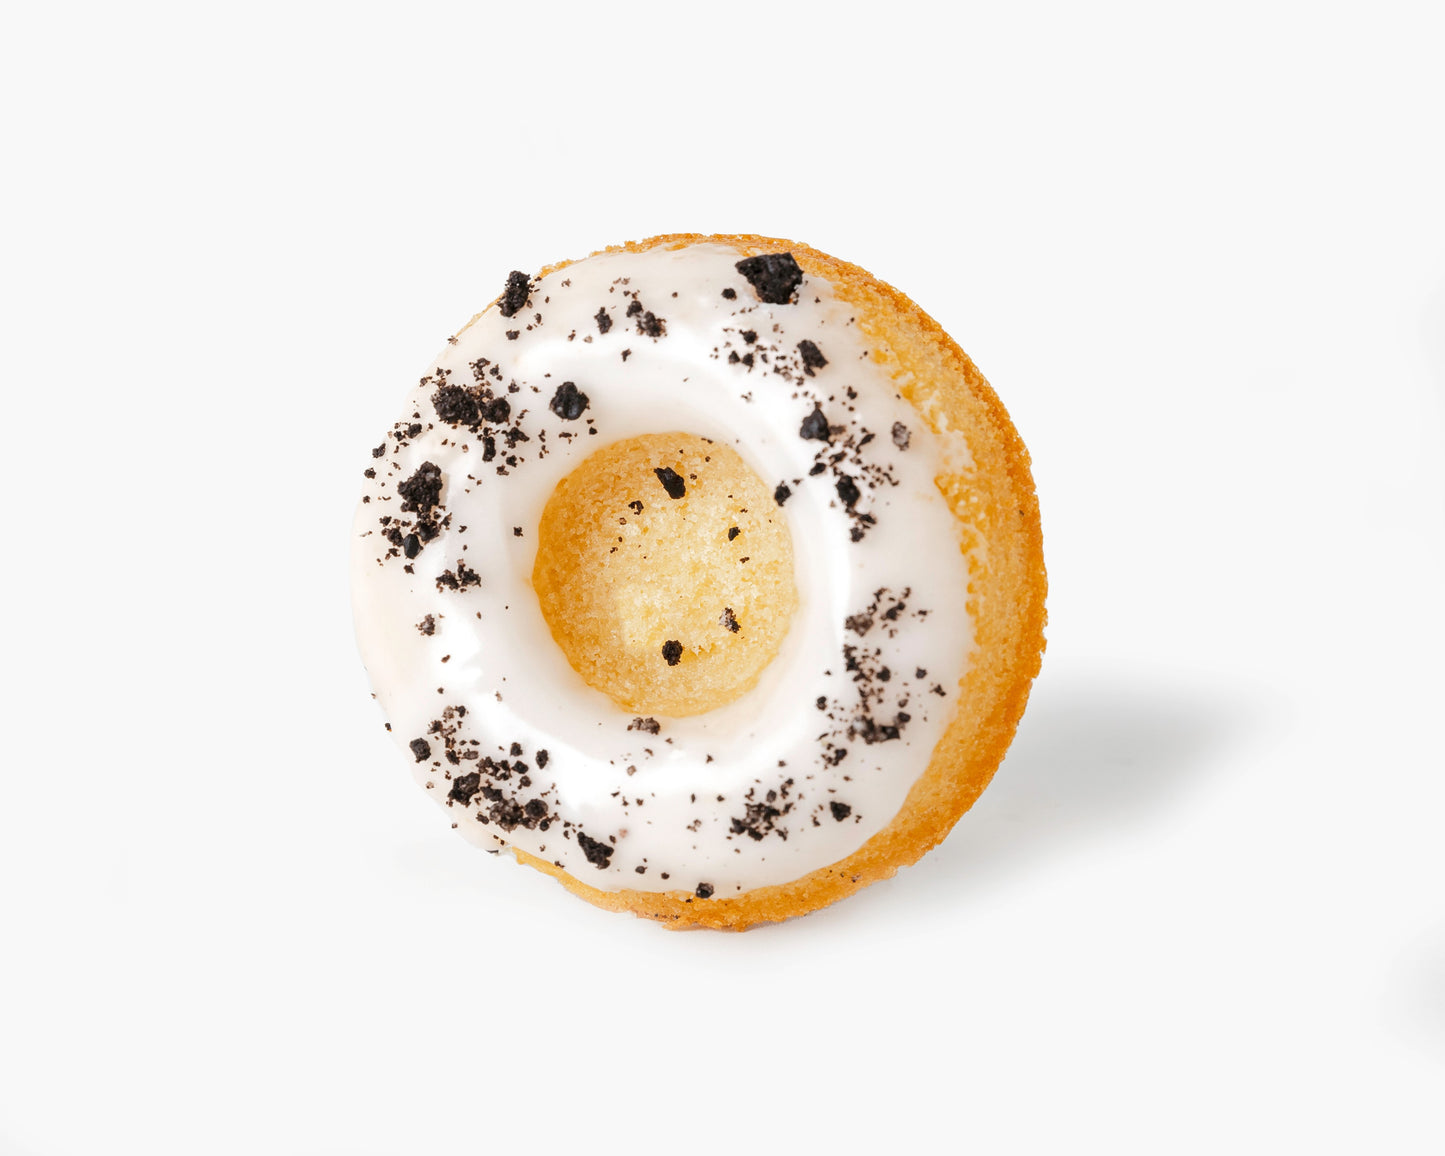 Mochi donuts